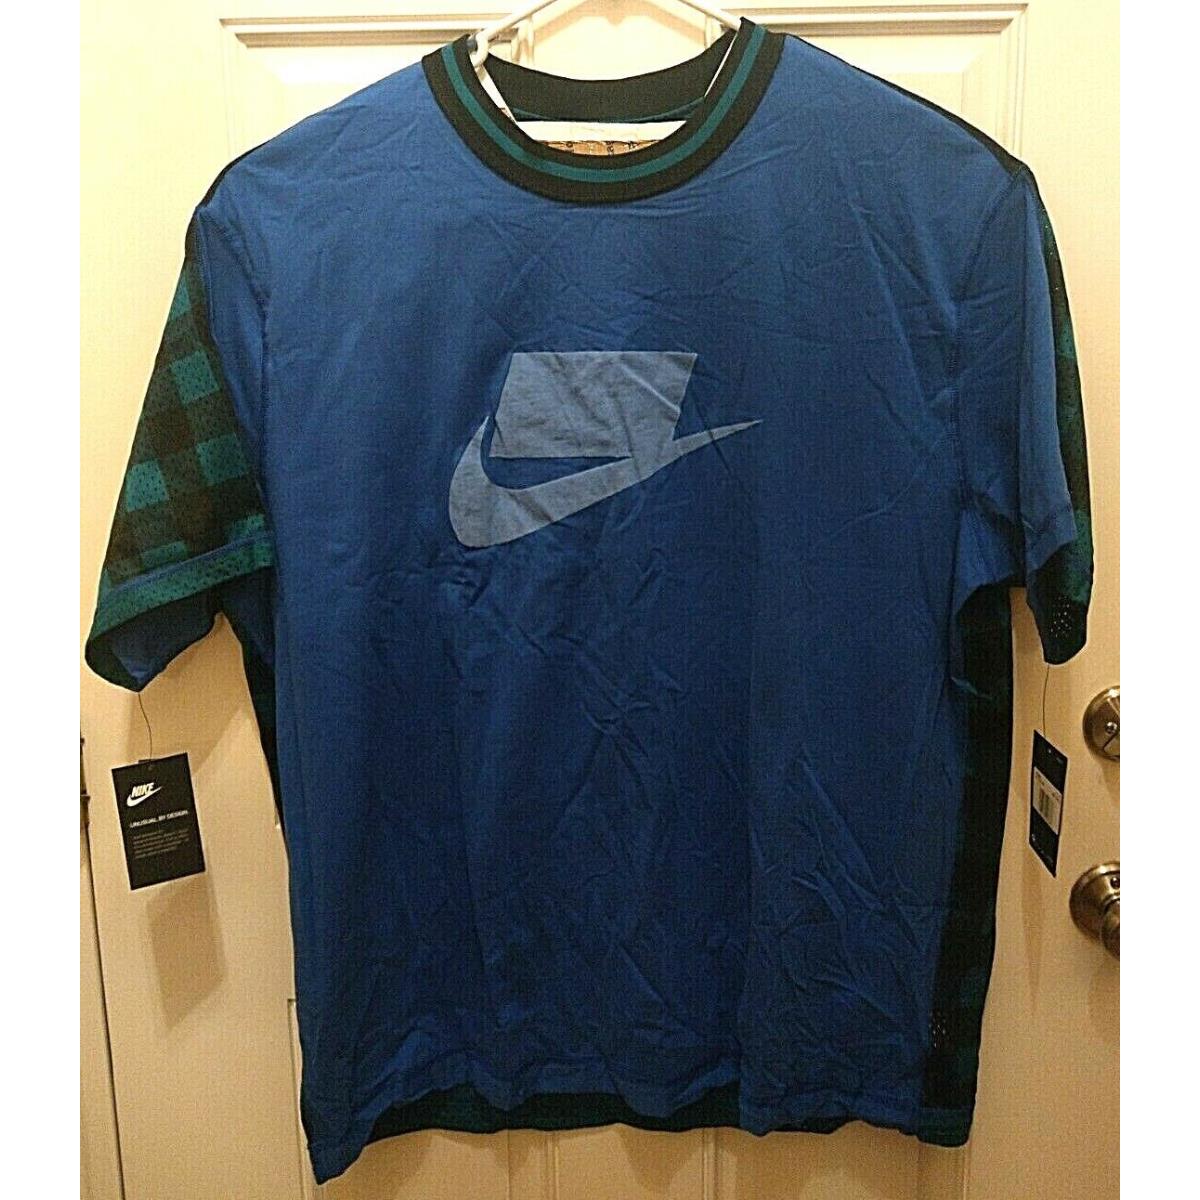 Nike Sportswear Nsw Nsp Plaid Blue Loose Fit BV4544-480 Men s Size Xxlt